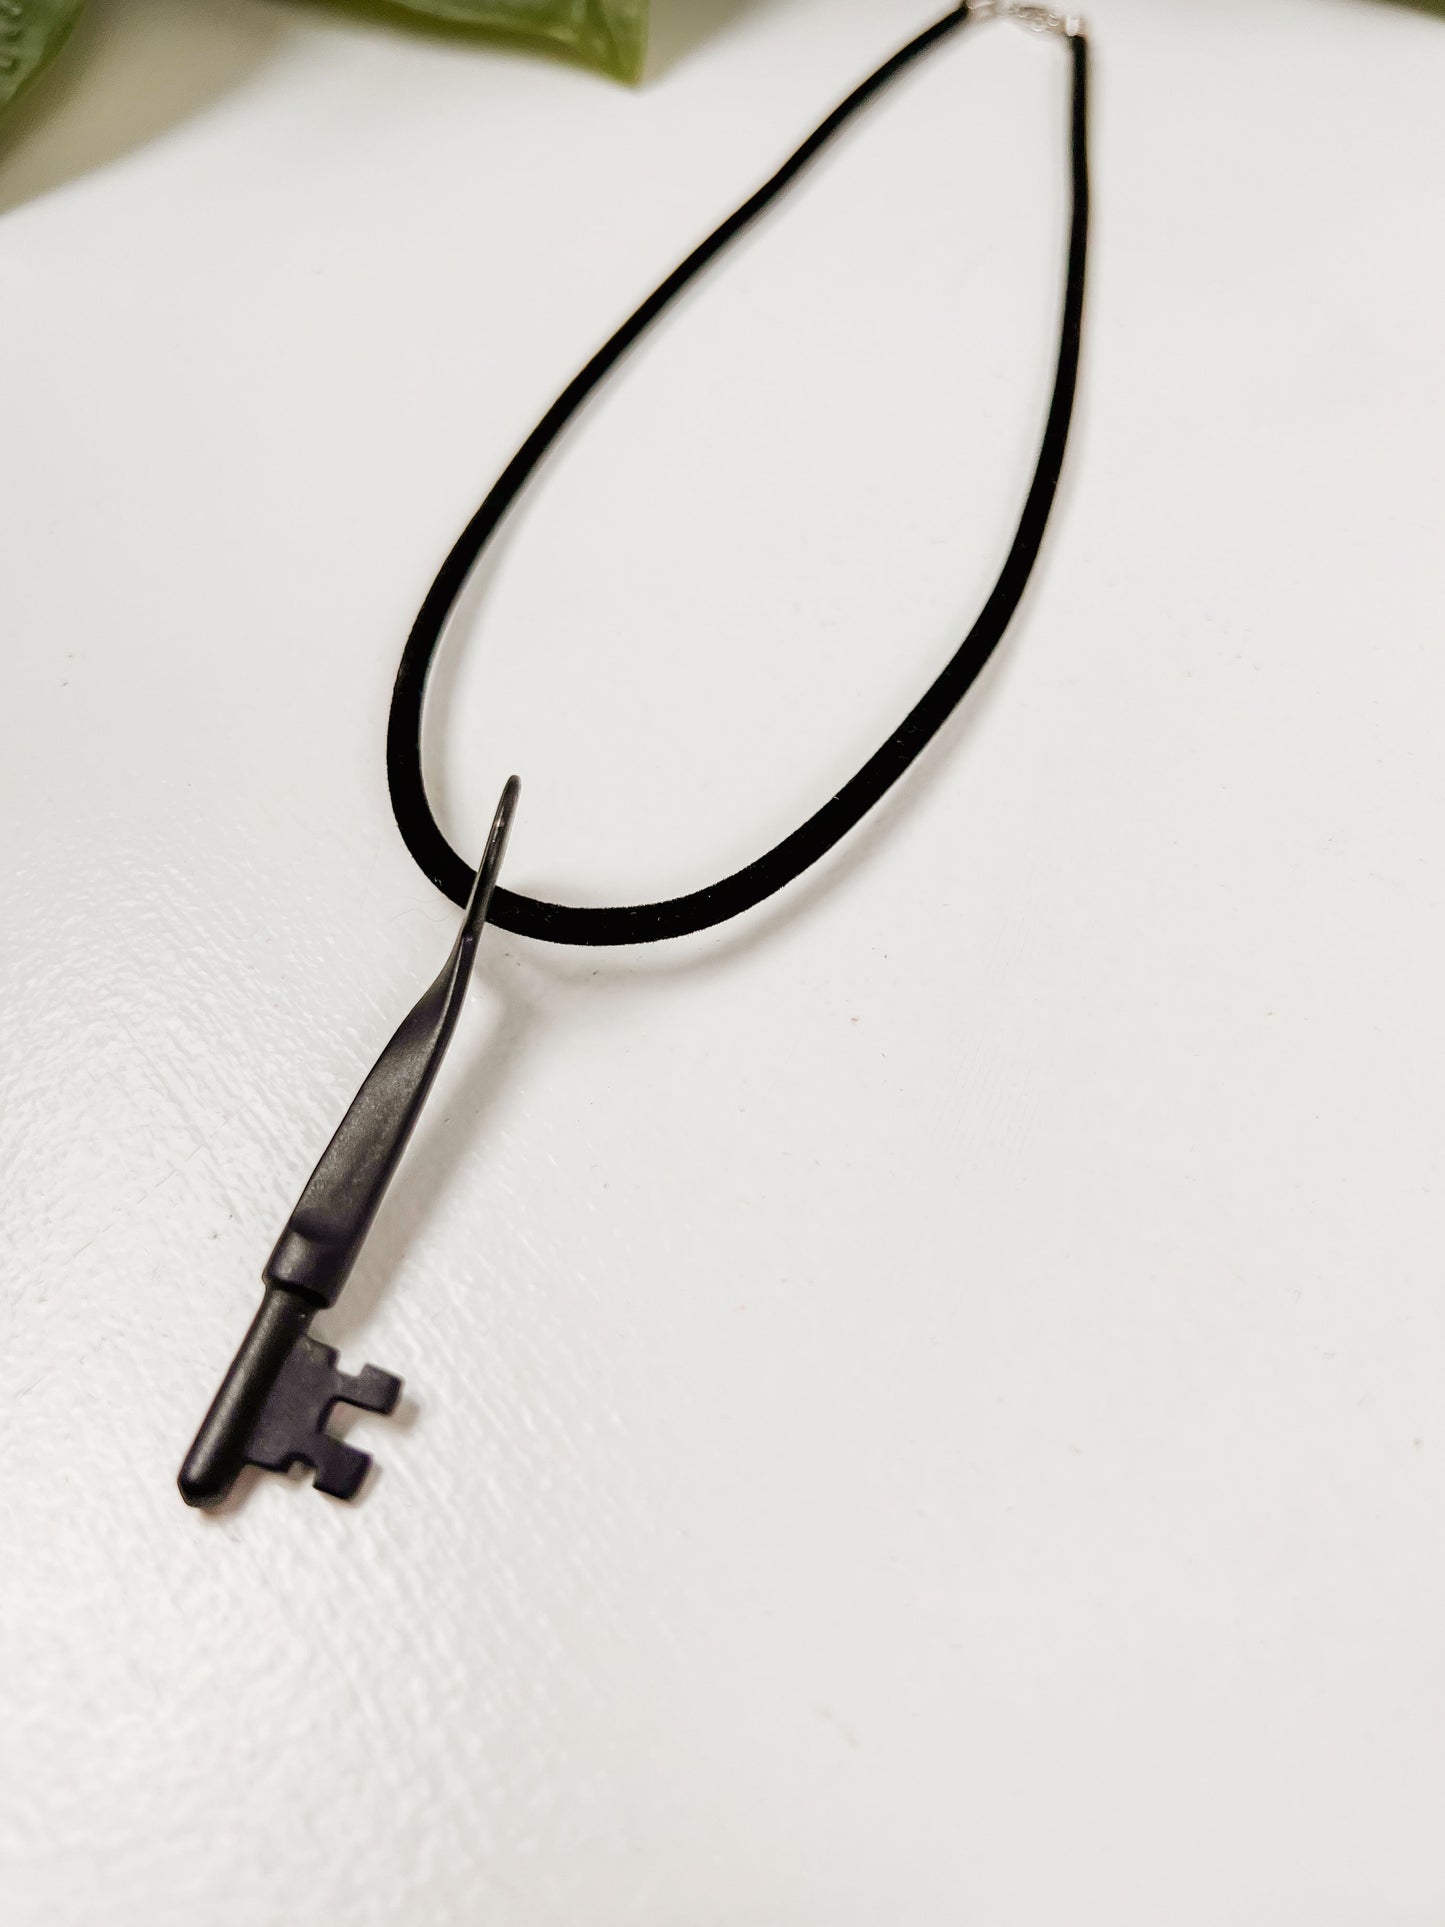 Antique Skeleton Twisted Key with Velvet Choker Necklace